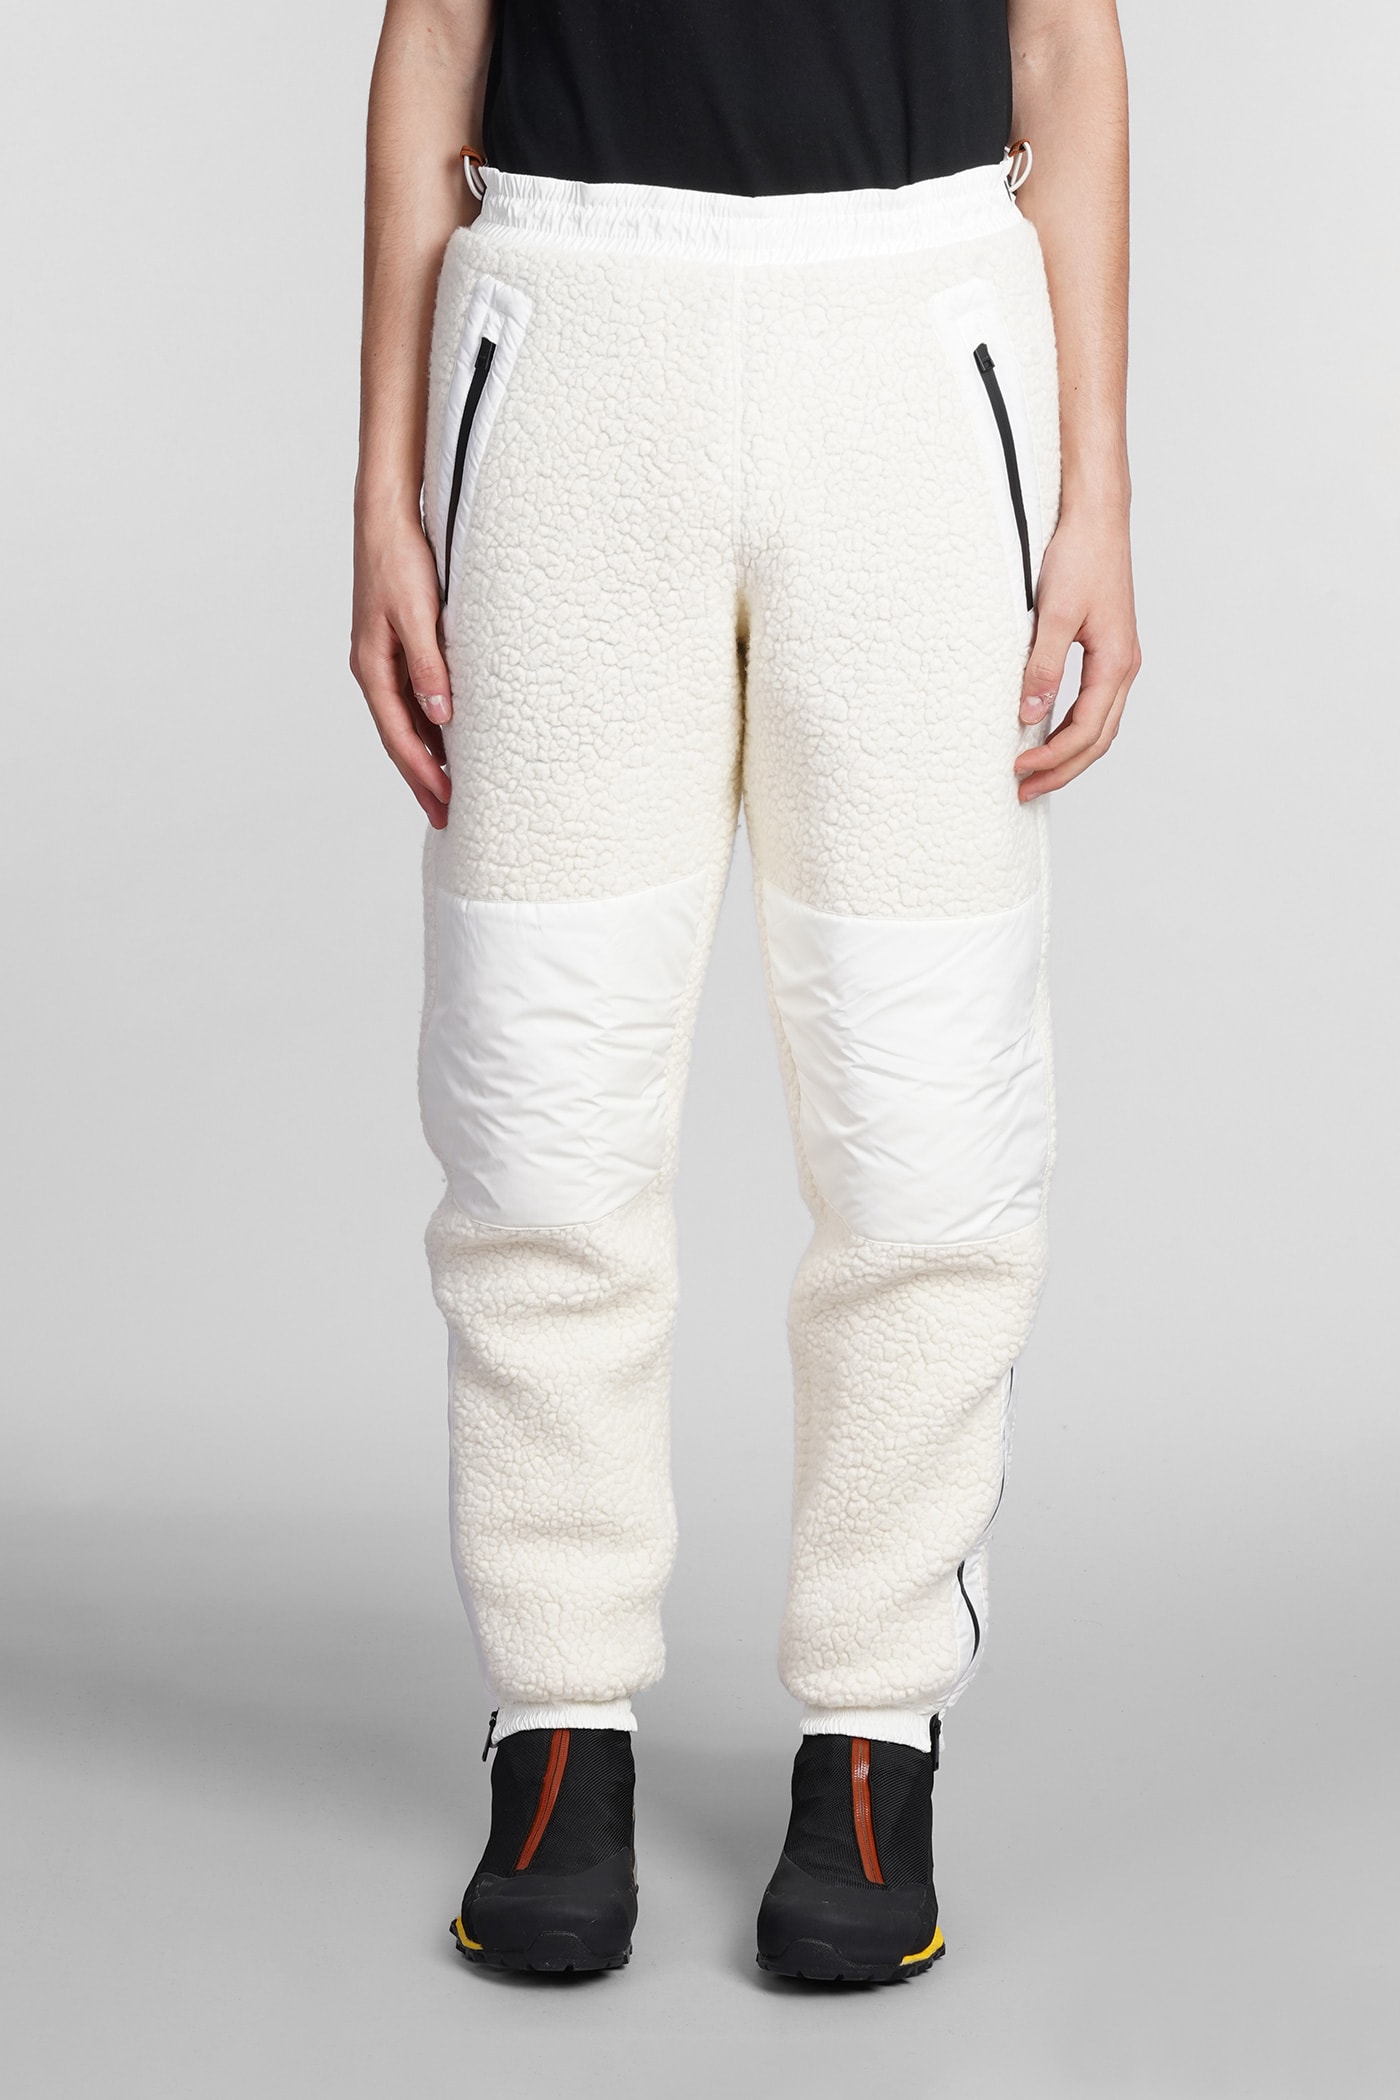 Ermenegildo Zegna Pants In White Wool